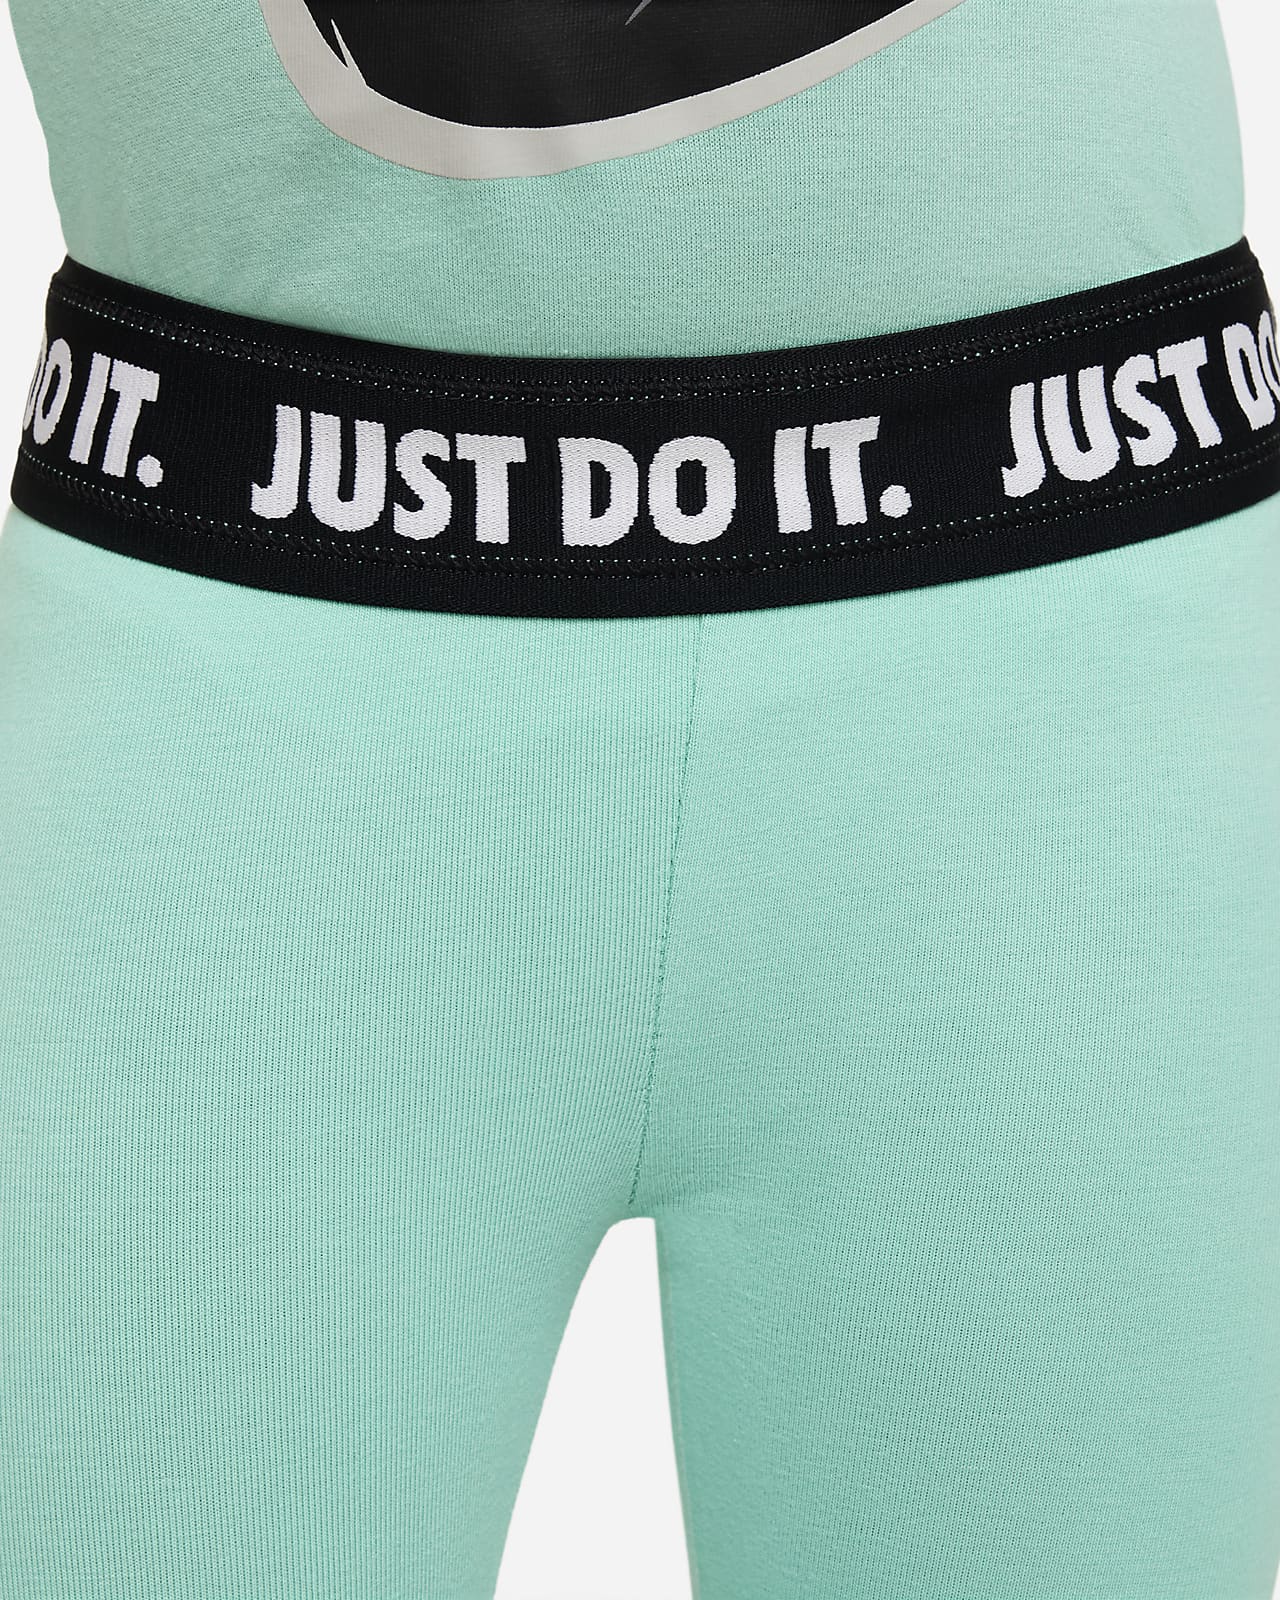 Nike Women's Pro Printed-Waistband Just Do It Shorts - Macy's